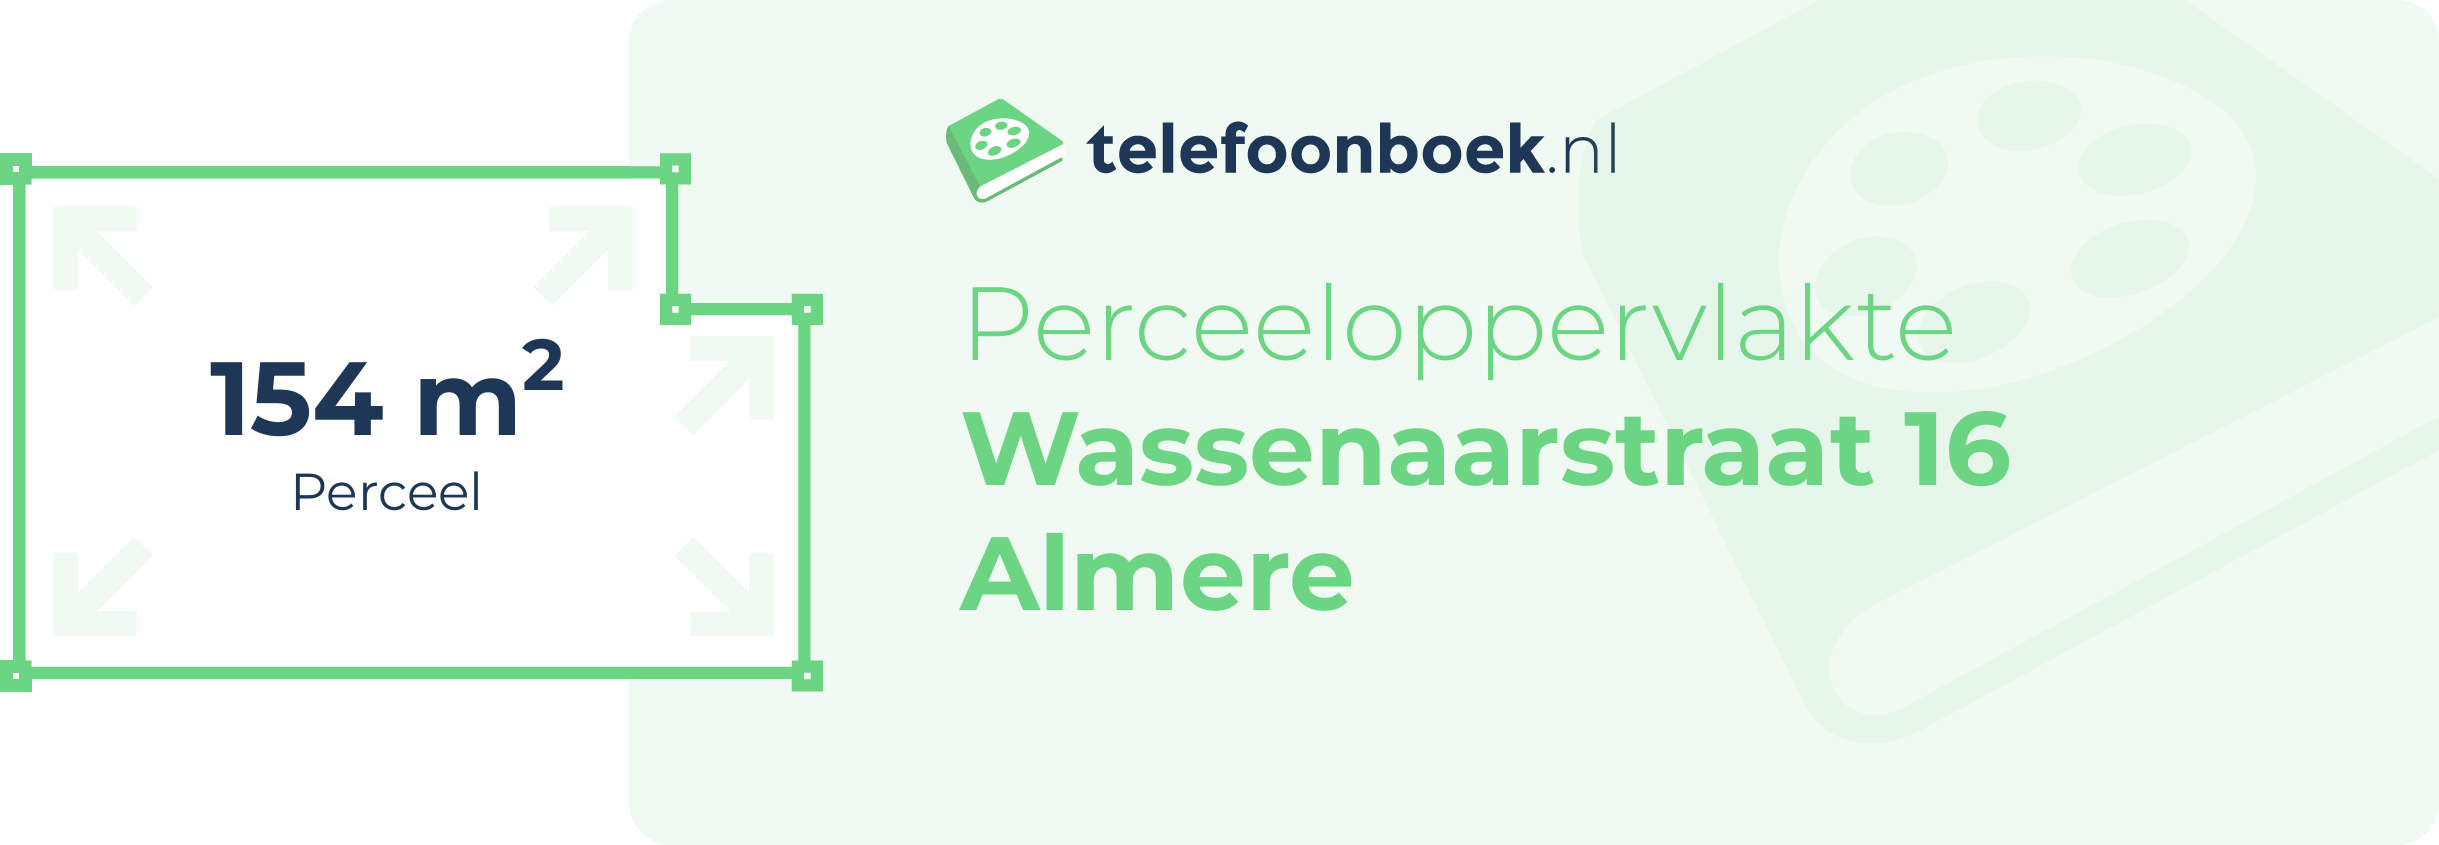 Perceeloppervlakte Wassenaarstraat 16 Almere